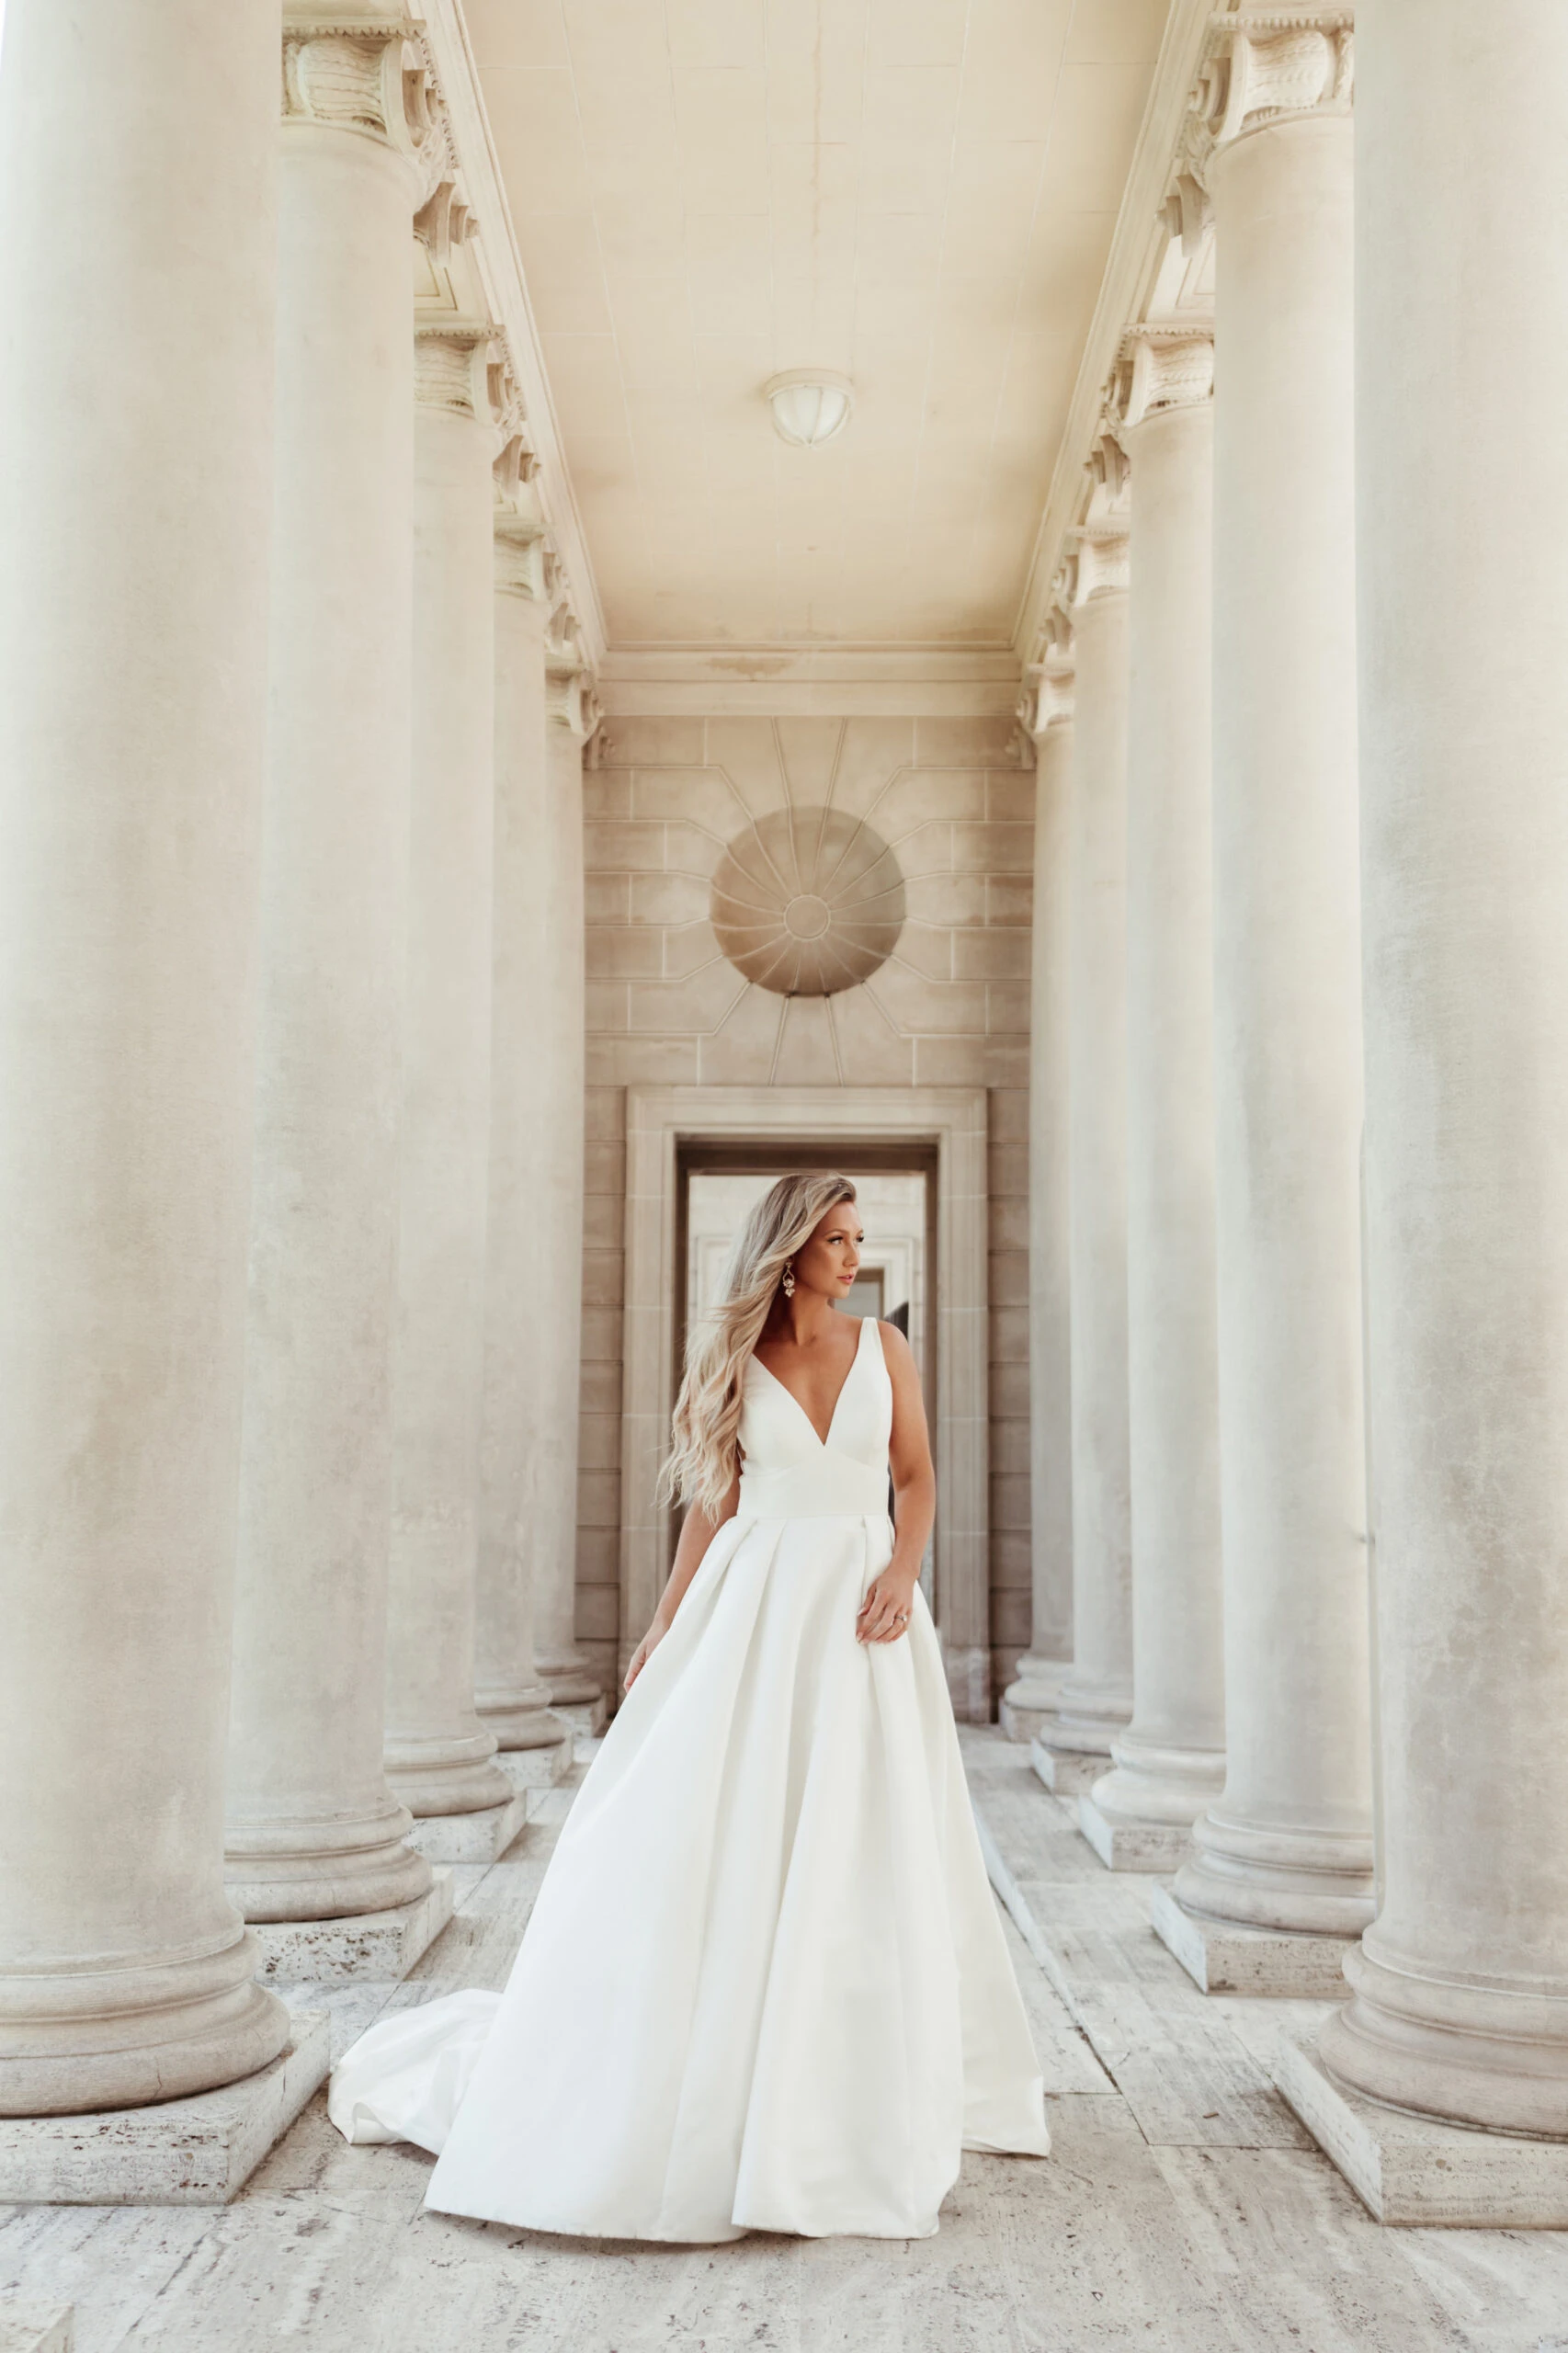 simple ballgown wedding dress with plunging v-neckline - 7755 by Stella York